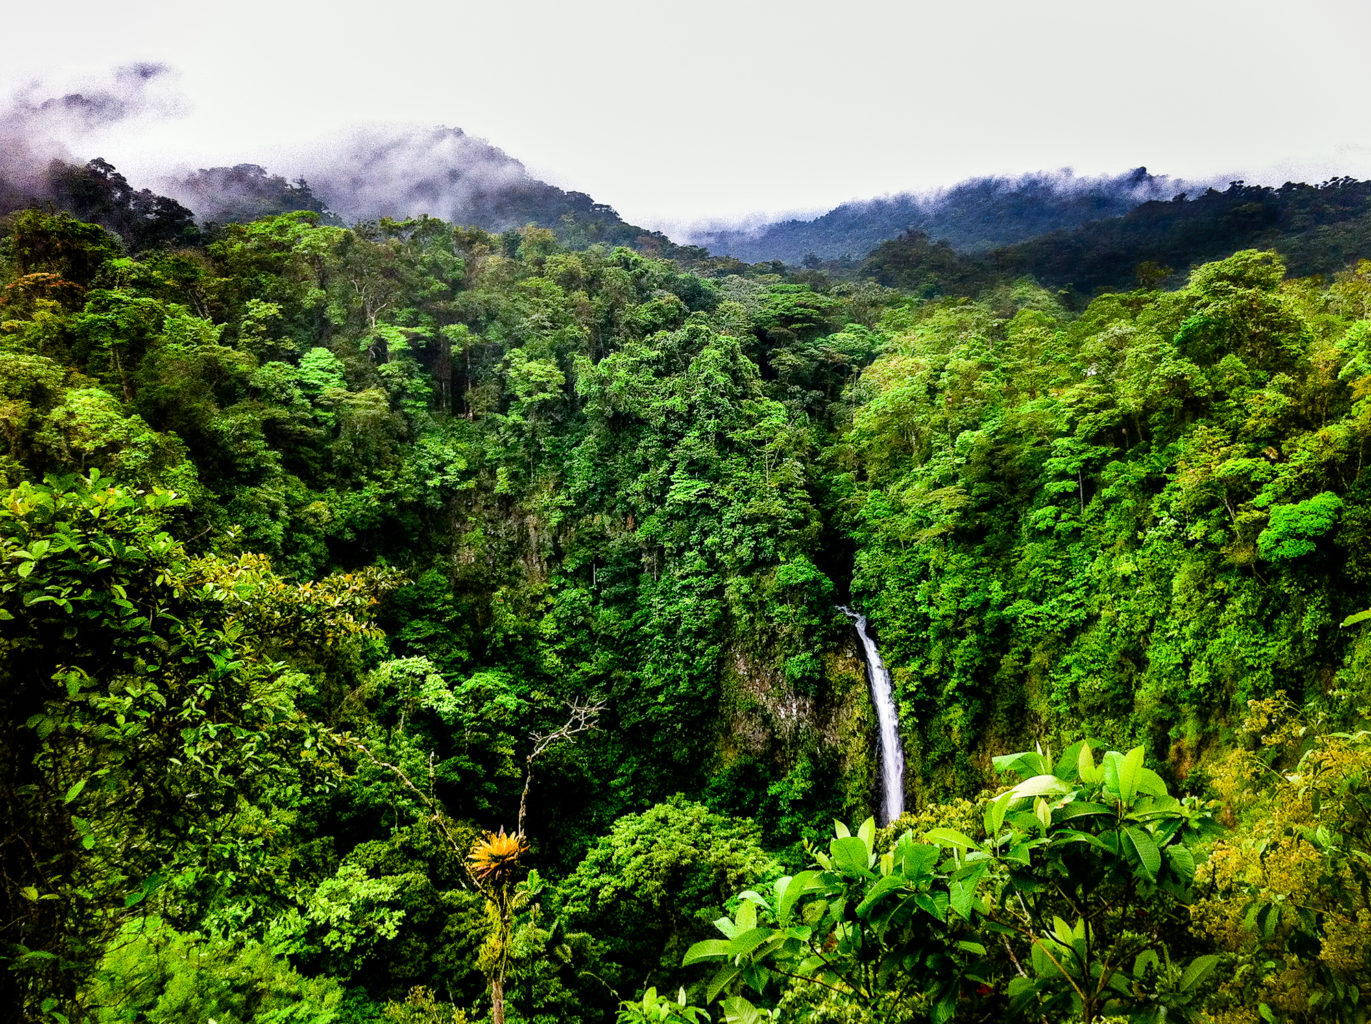 (somewhere in Costa Rica)